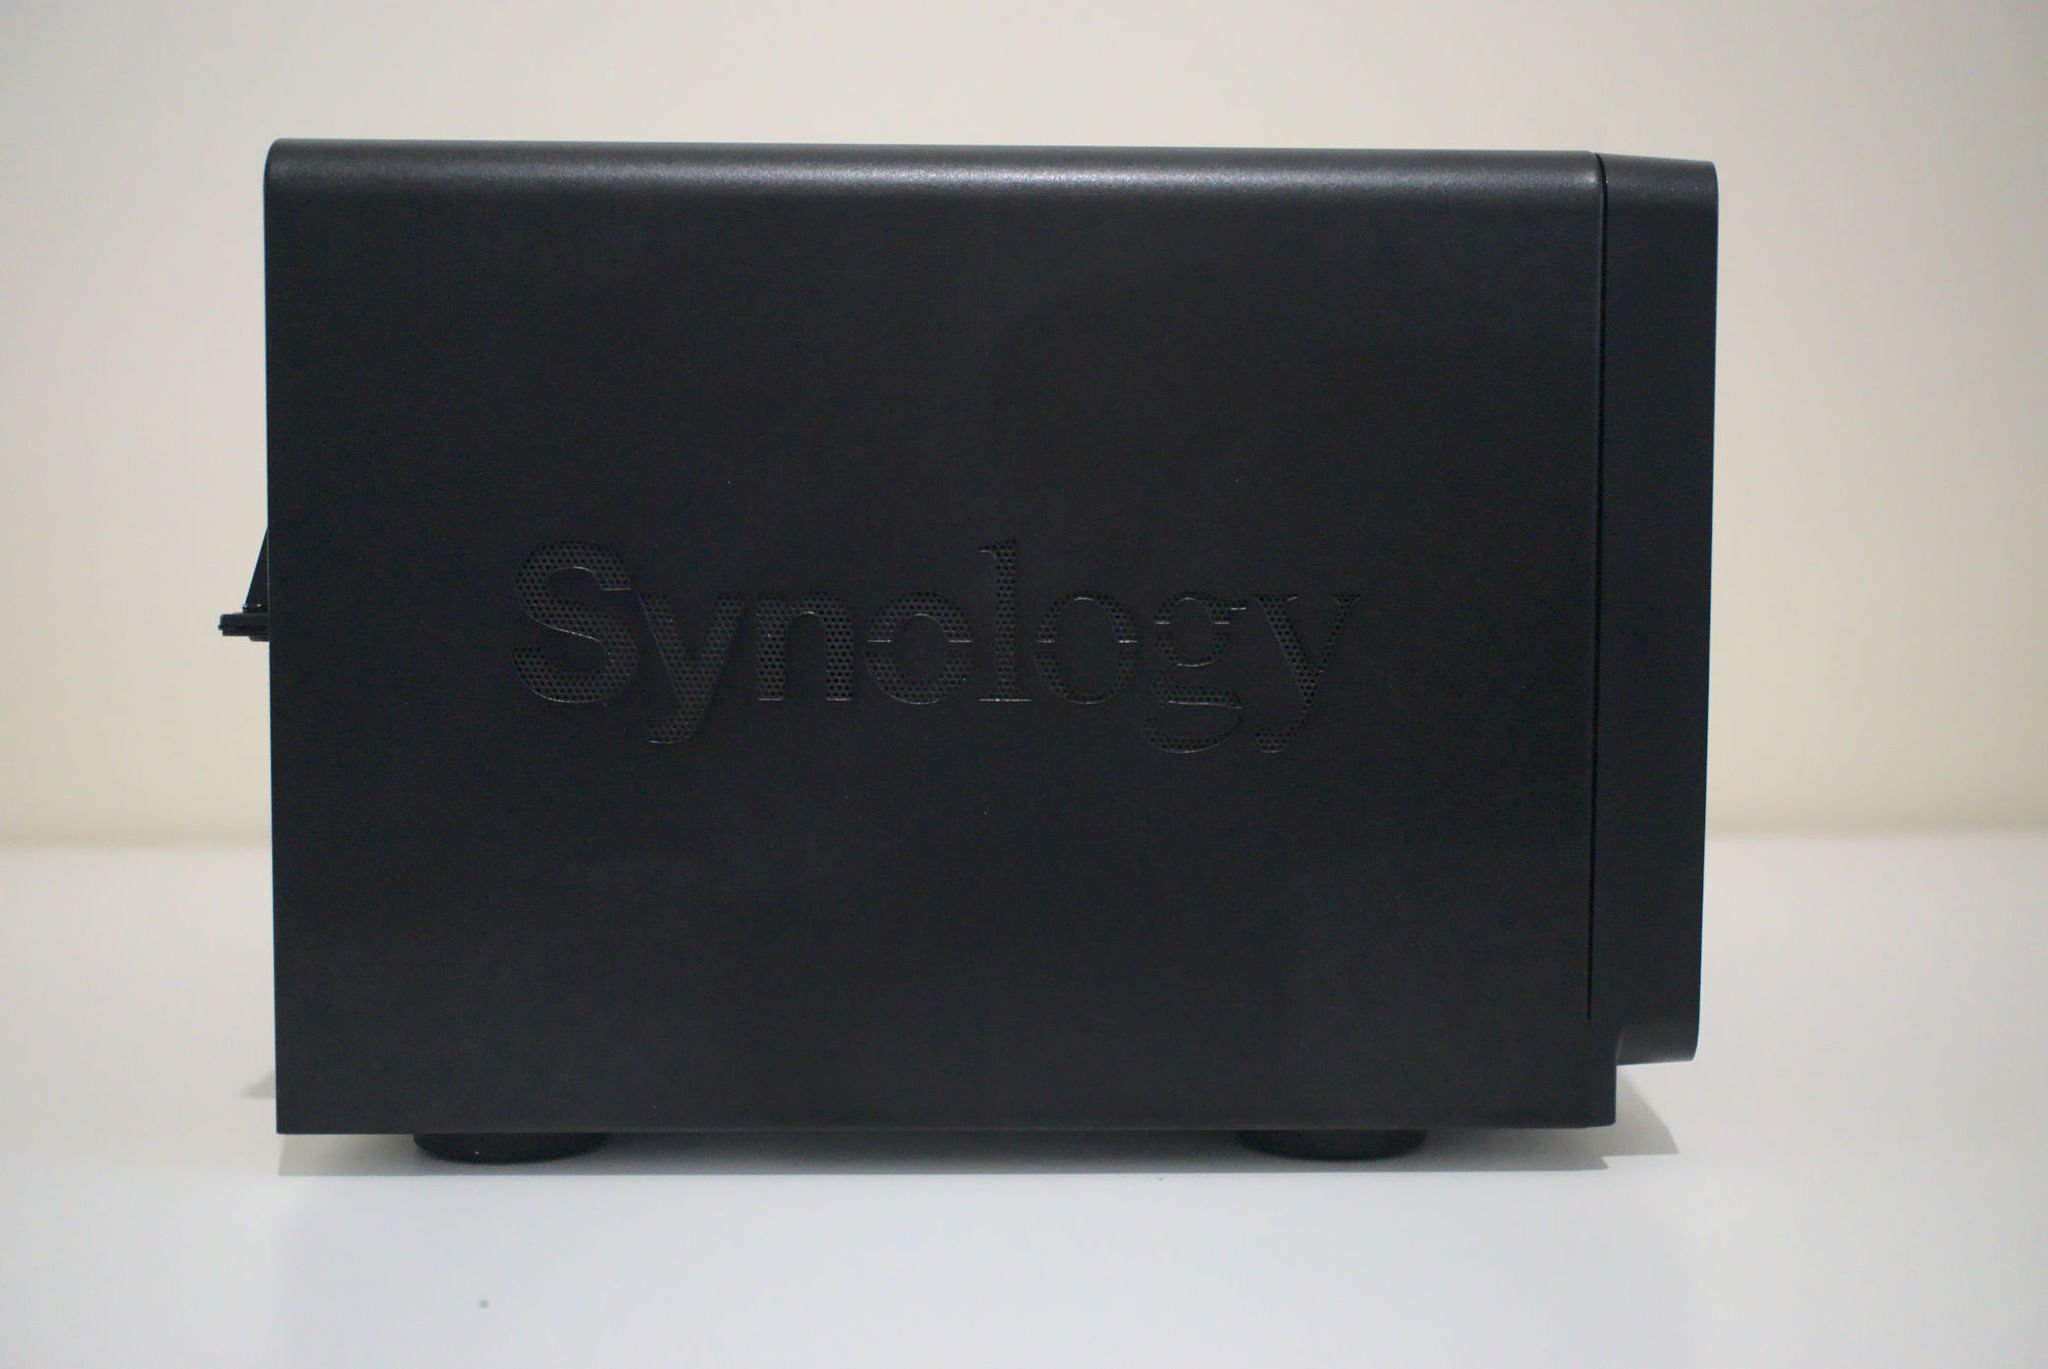 Synology DiskStation DS1621+